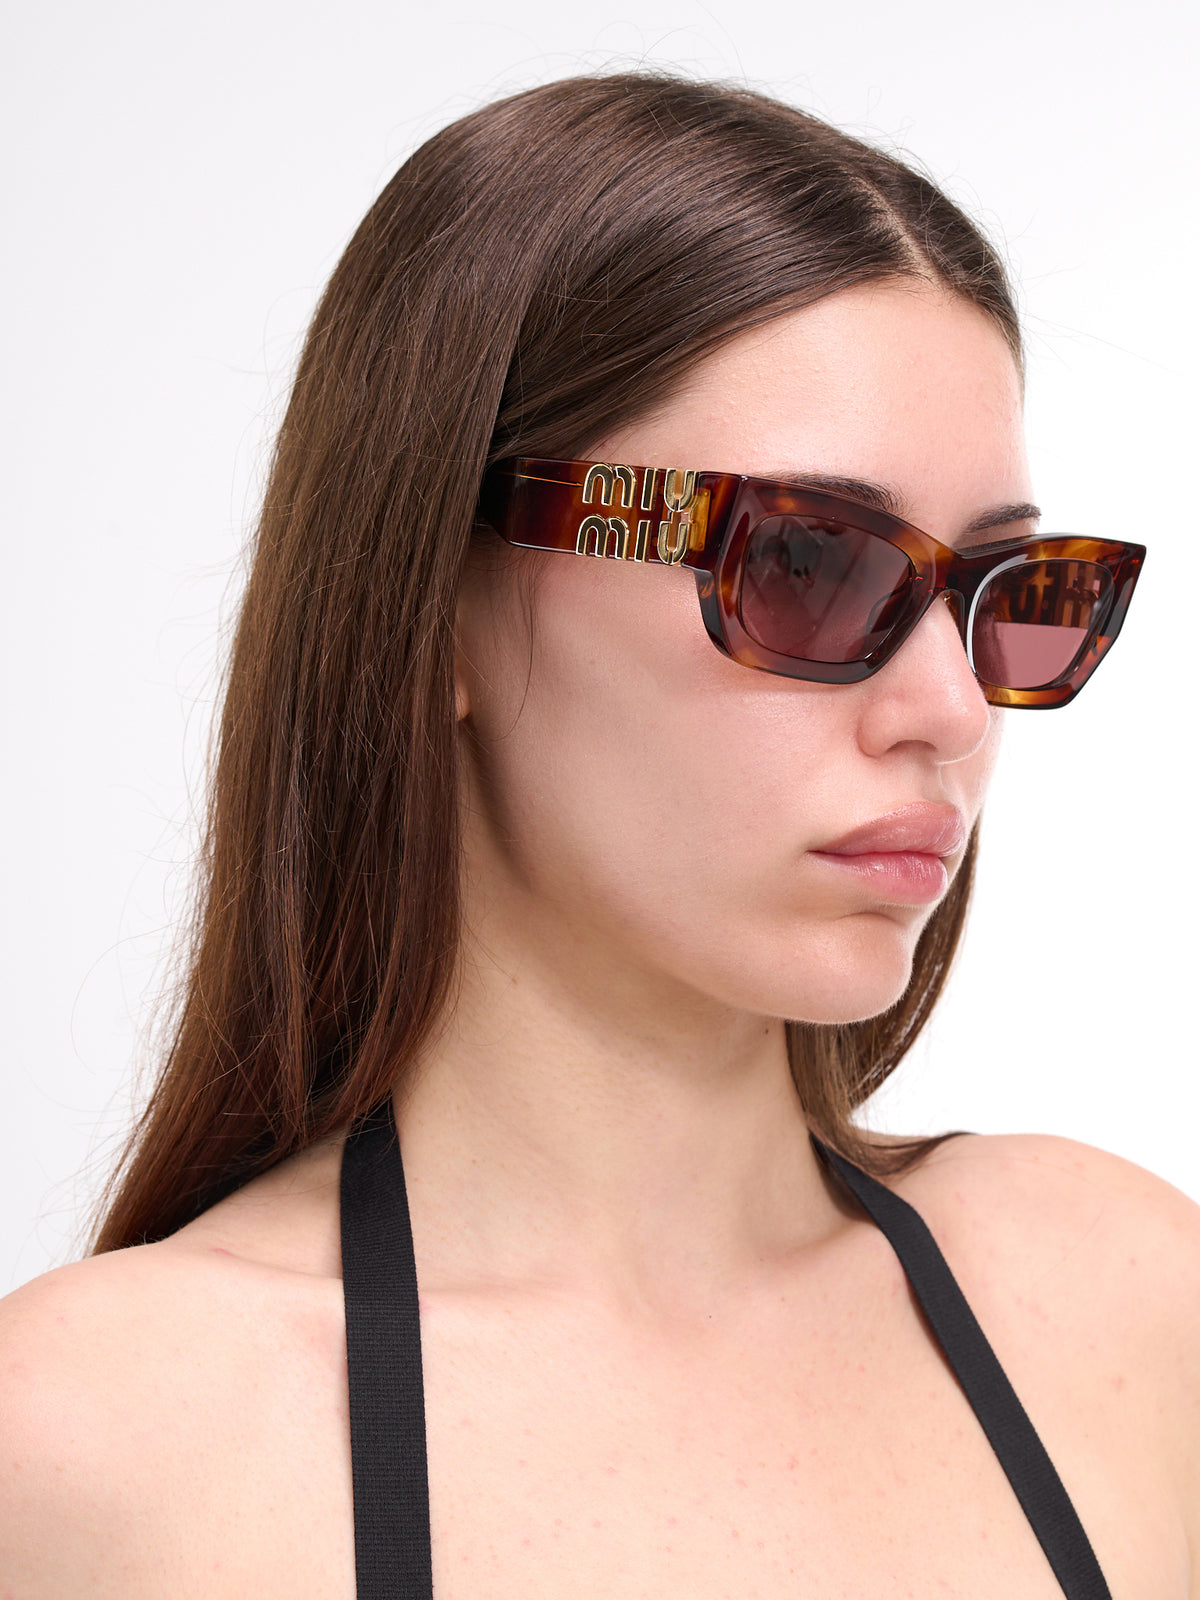 Angled Rectangular Sunglasses (0MU-09WS-STRIPED-TOBACCO-VIOLE)